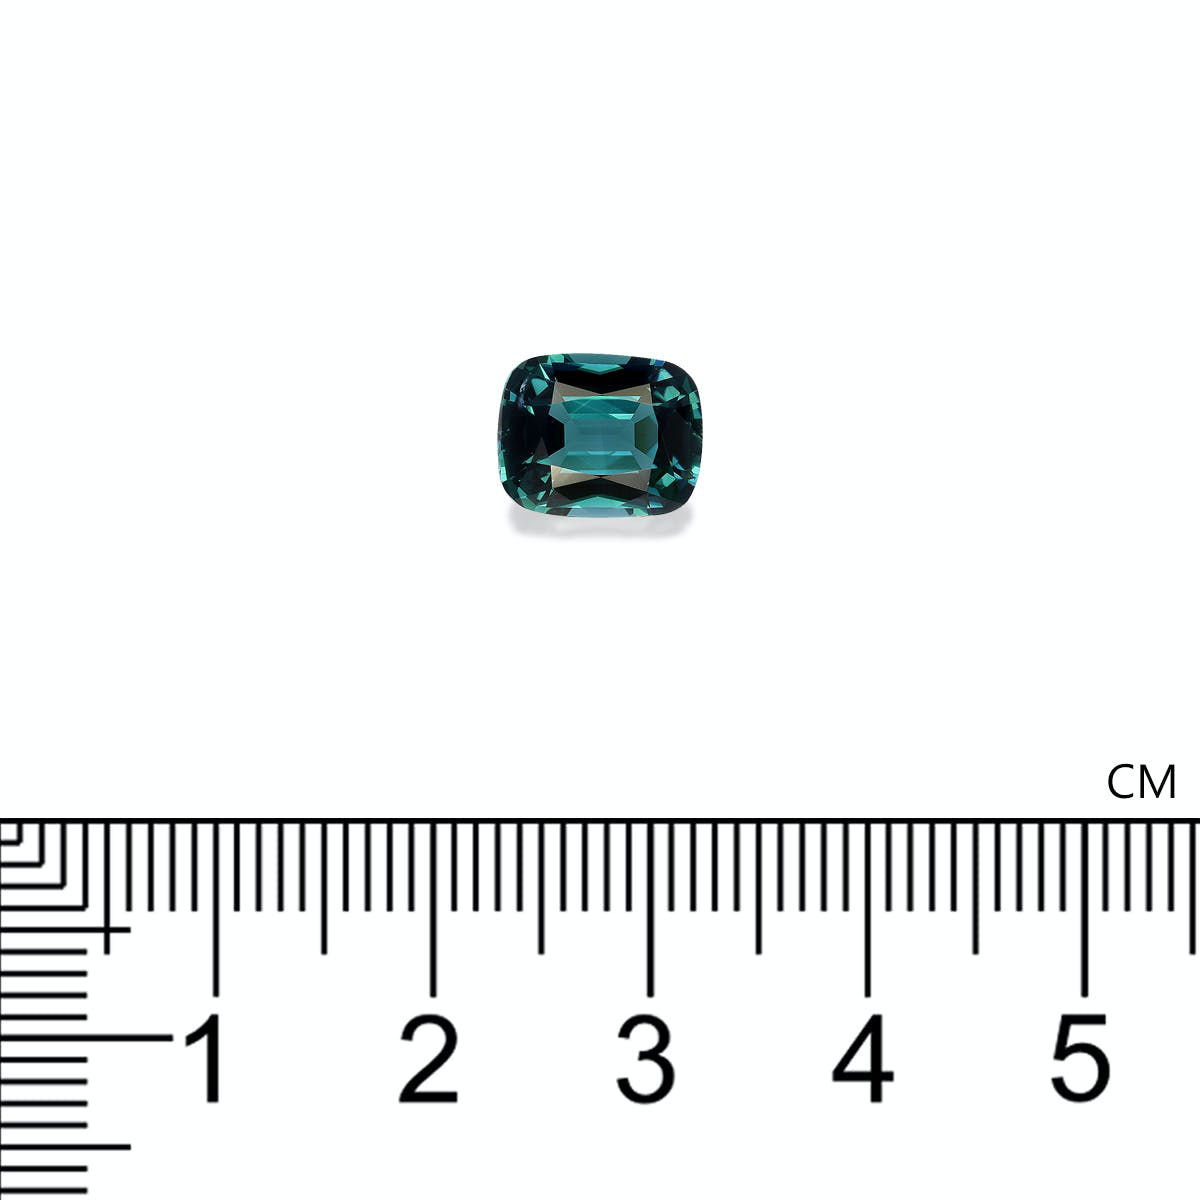 Teal Blue Paraiba Tourmaline 2.64ct - 9x7mm (PA1635)